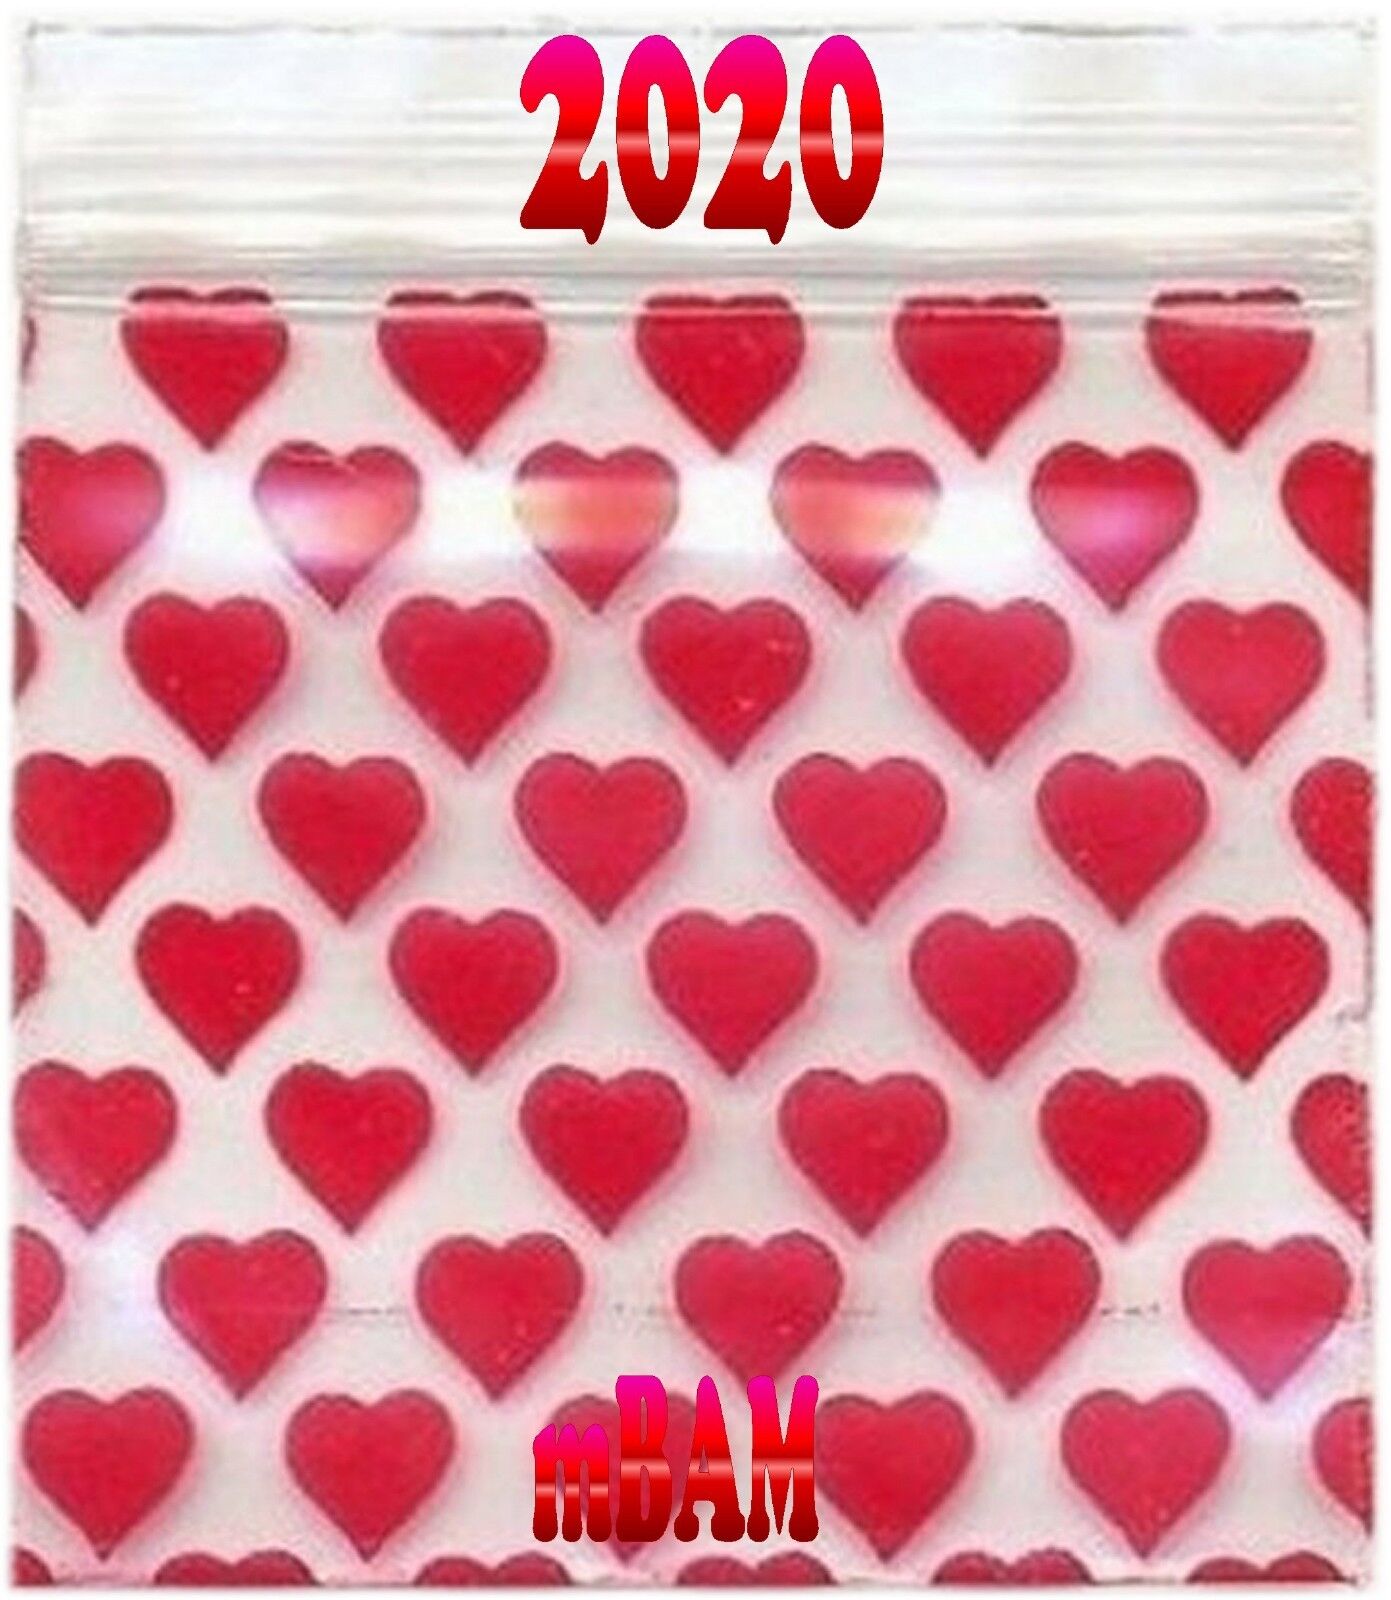 500 POKER LOT Apple Zip Baggies Mini Bags Clubs Hearts Diamonds Spades 3030 Apple Bags Does Not Apply - фотография #6